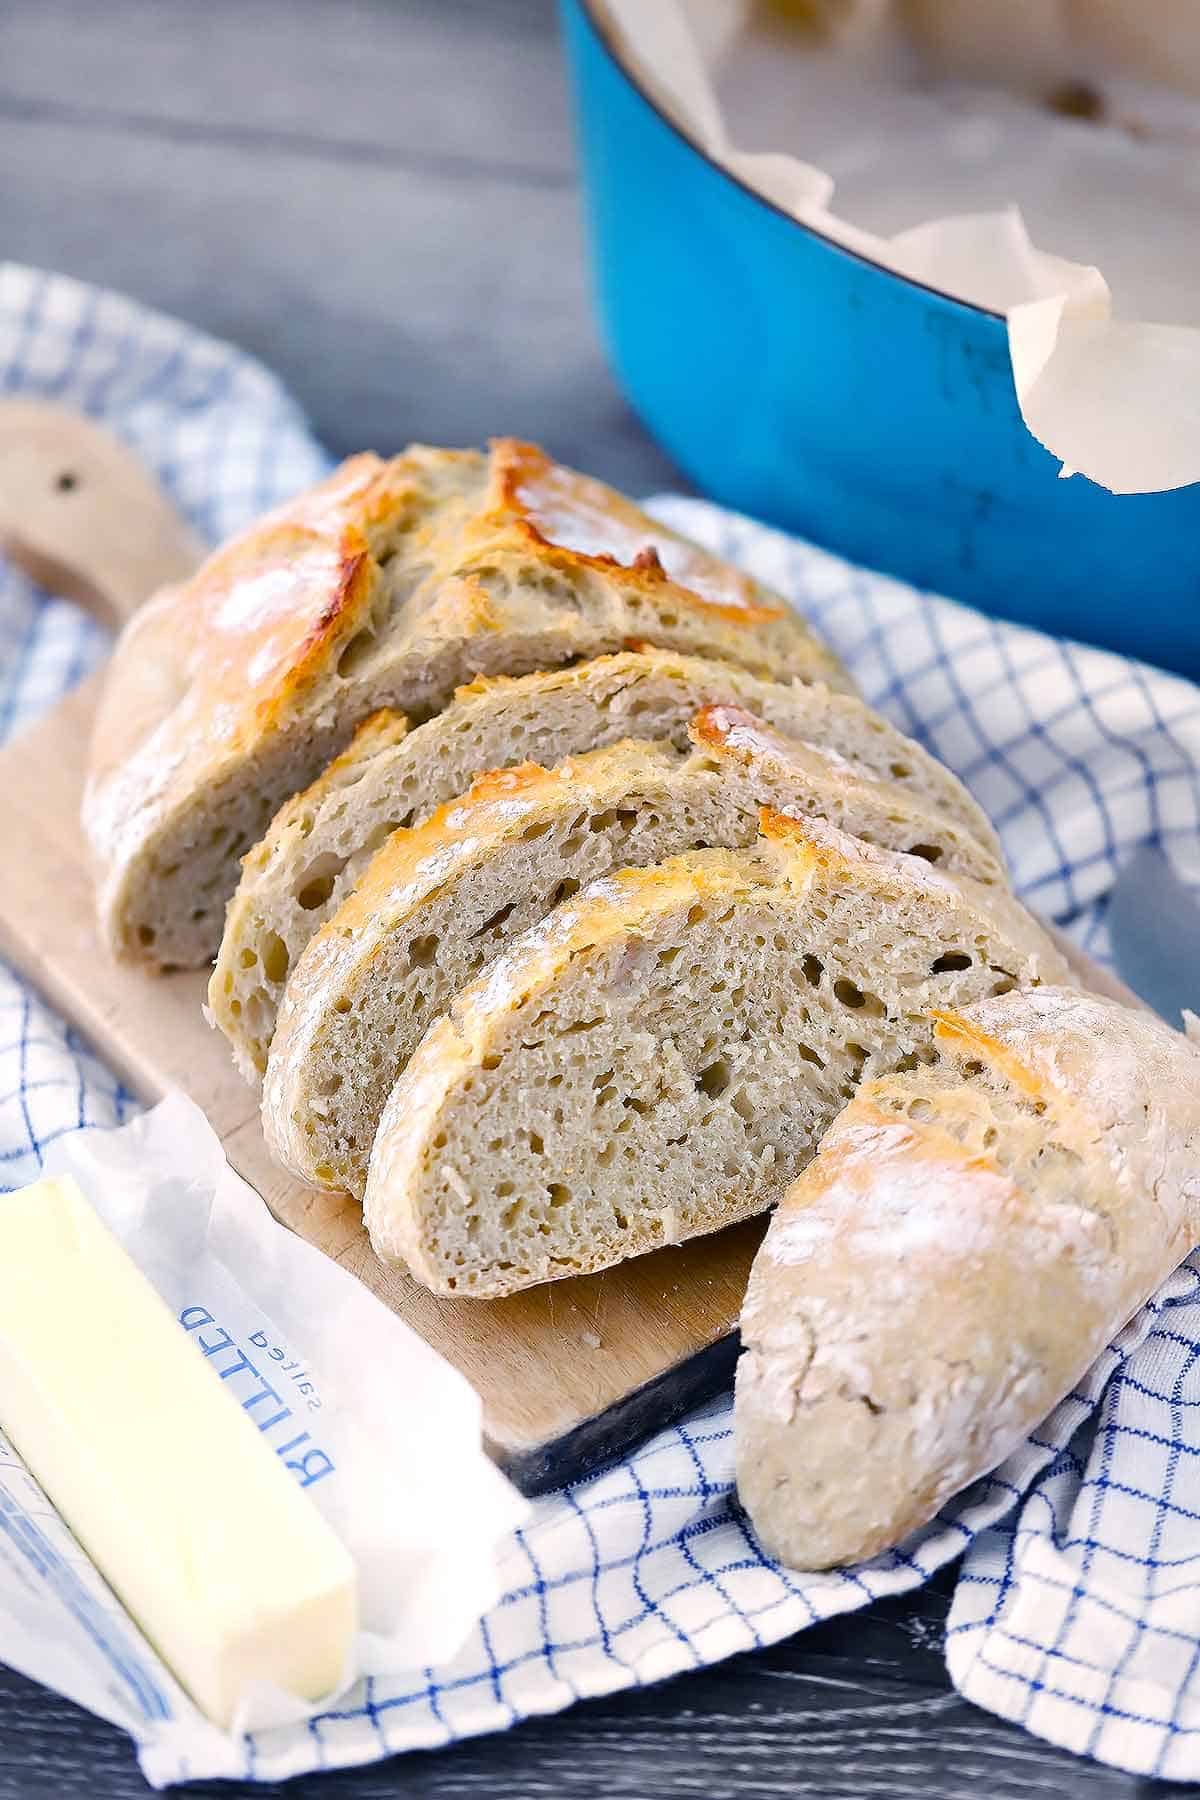 https://www.bowlofdelicious.com/wp-content/uploads/2020/04/dutch-oven-no-knead-bread-3.jpg